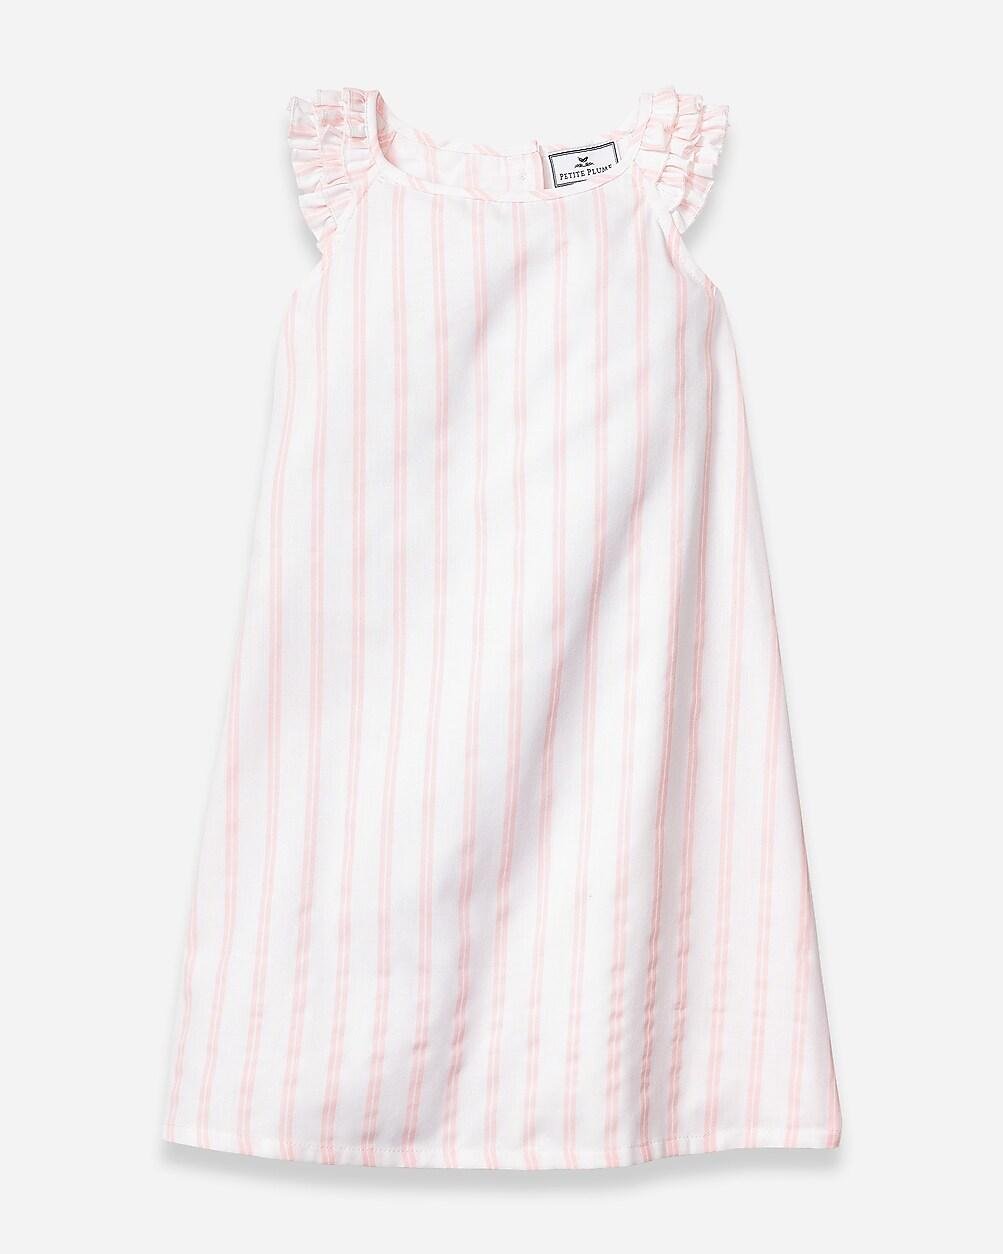 Petite Plume™ girls' Amelie nightgown in stripe by J.CREW